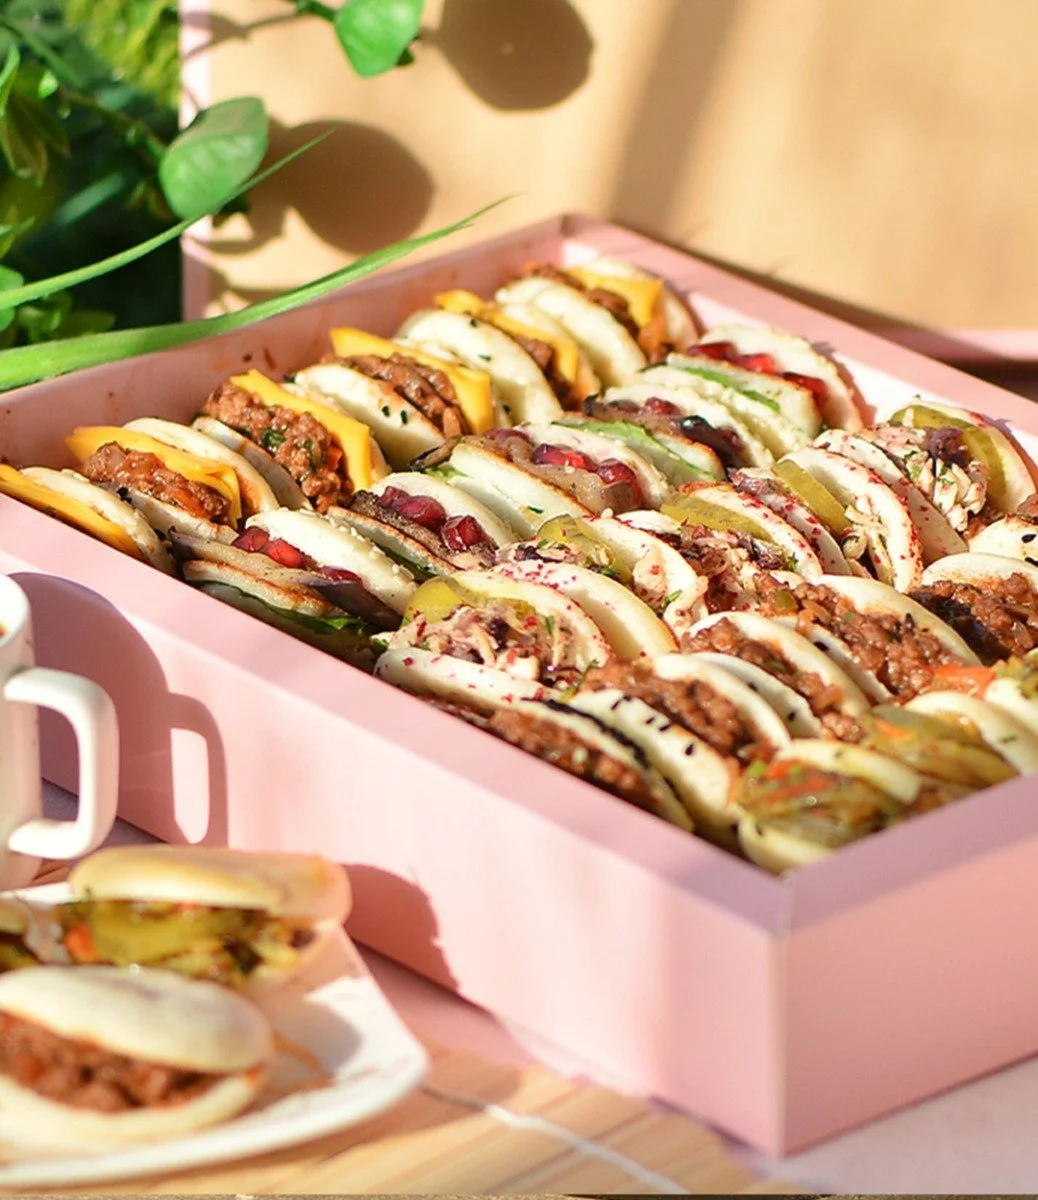 Mini Pita Sandwiches by Bakery & Company